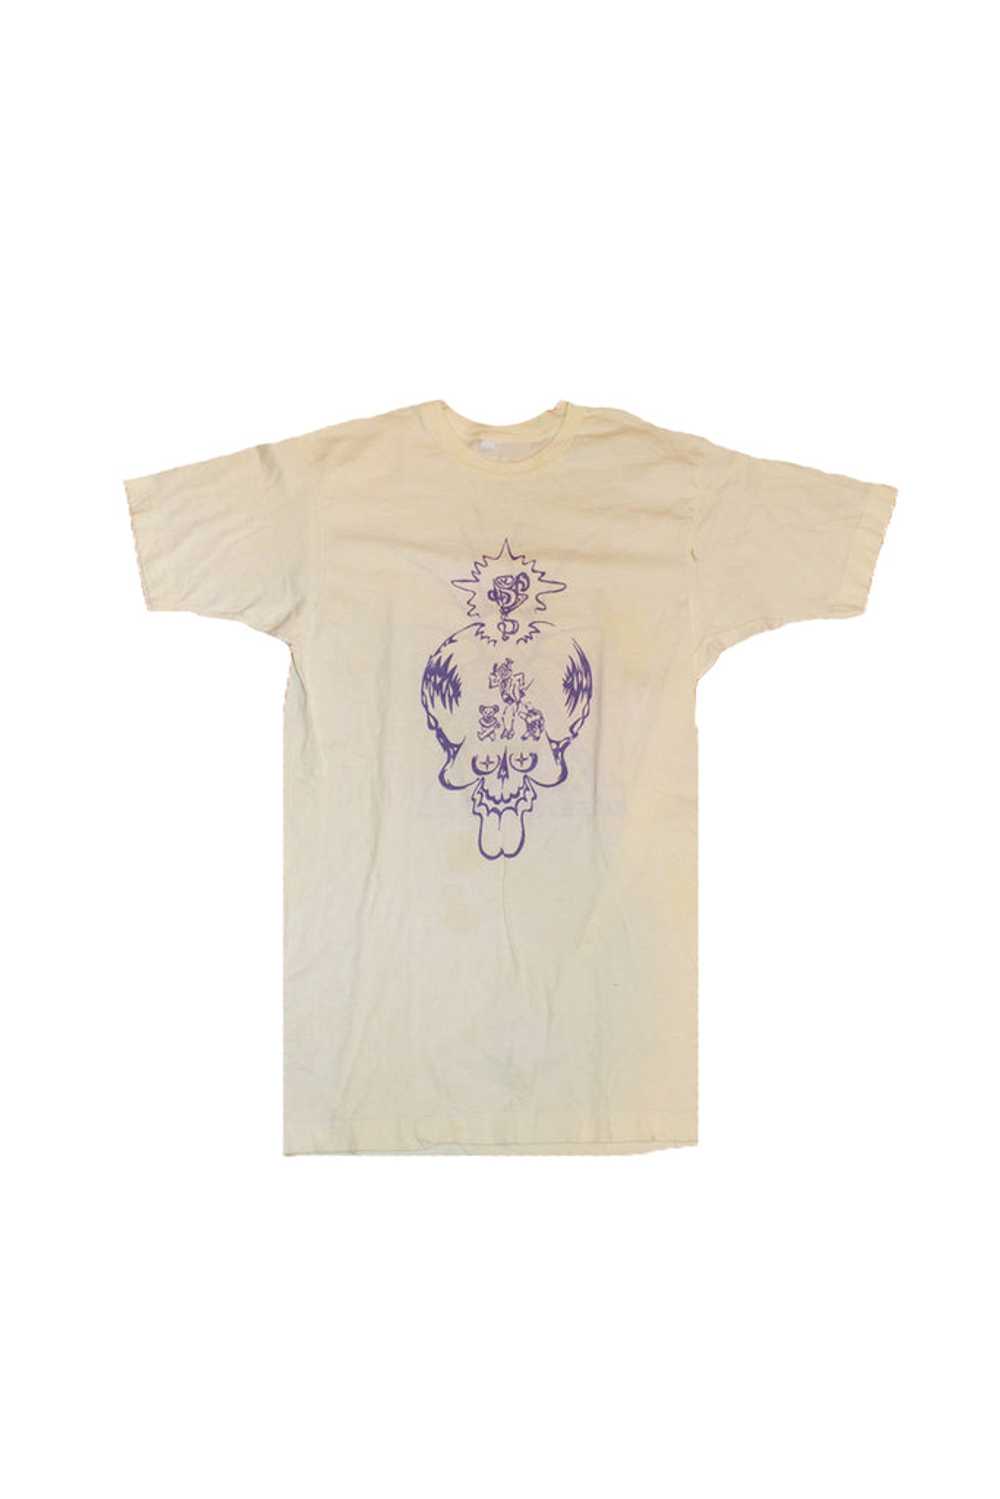 Vintage 80's Grateful Dead T-Shirt - image 1